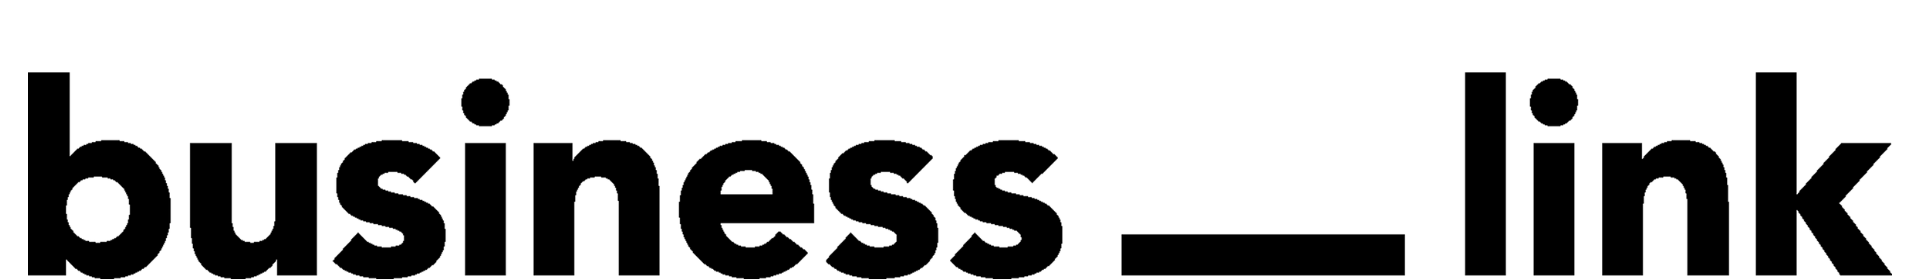 business_link logo 1